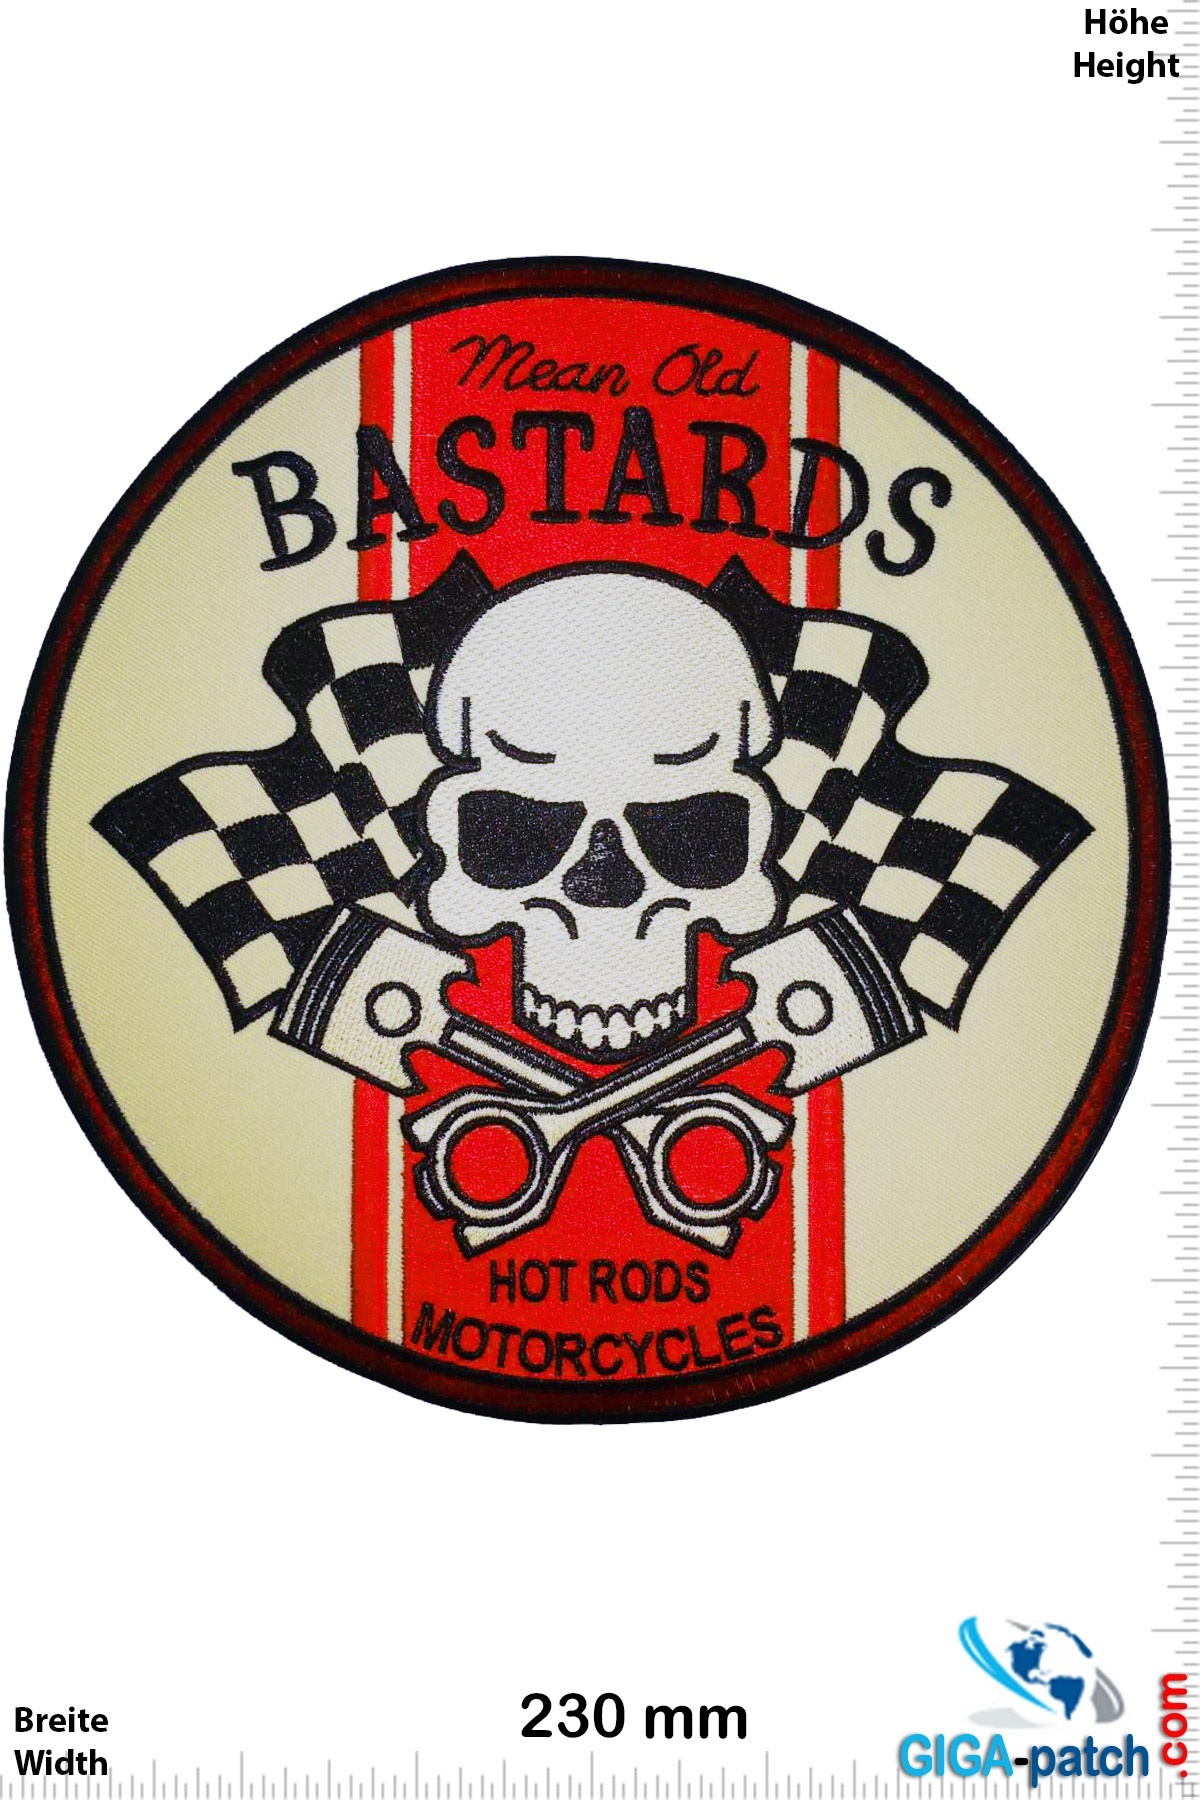 Cafe Racer Bastards - mean old - Hot Rods Motorcycles - Caferacer - 26 cm